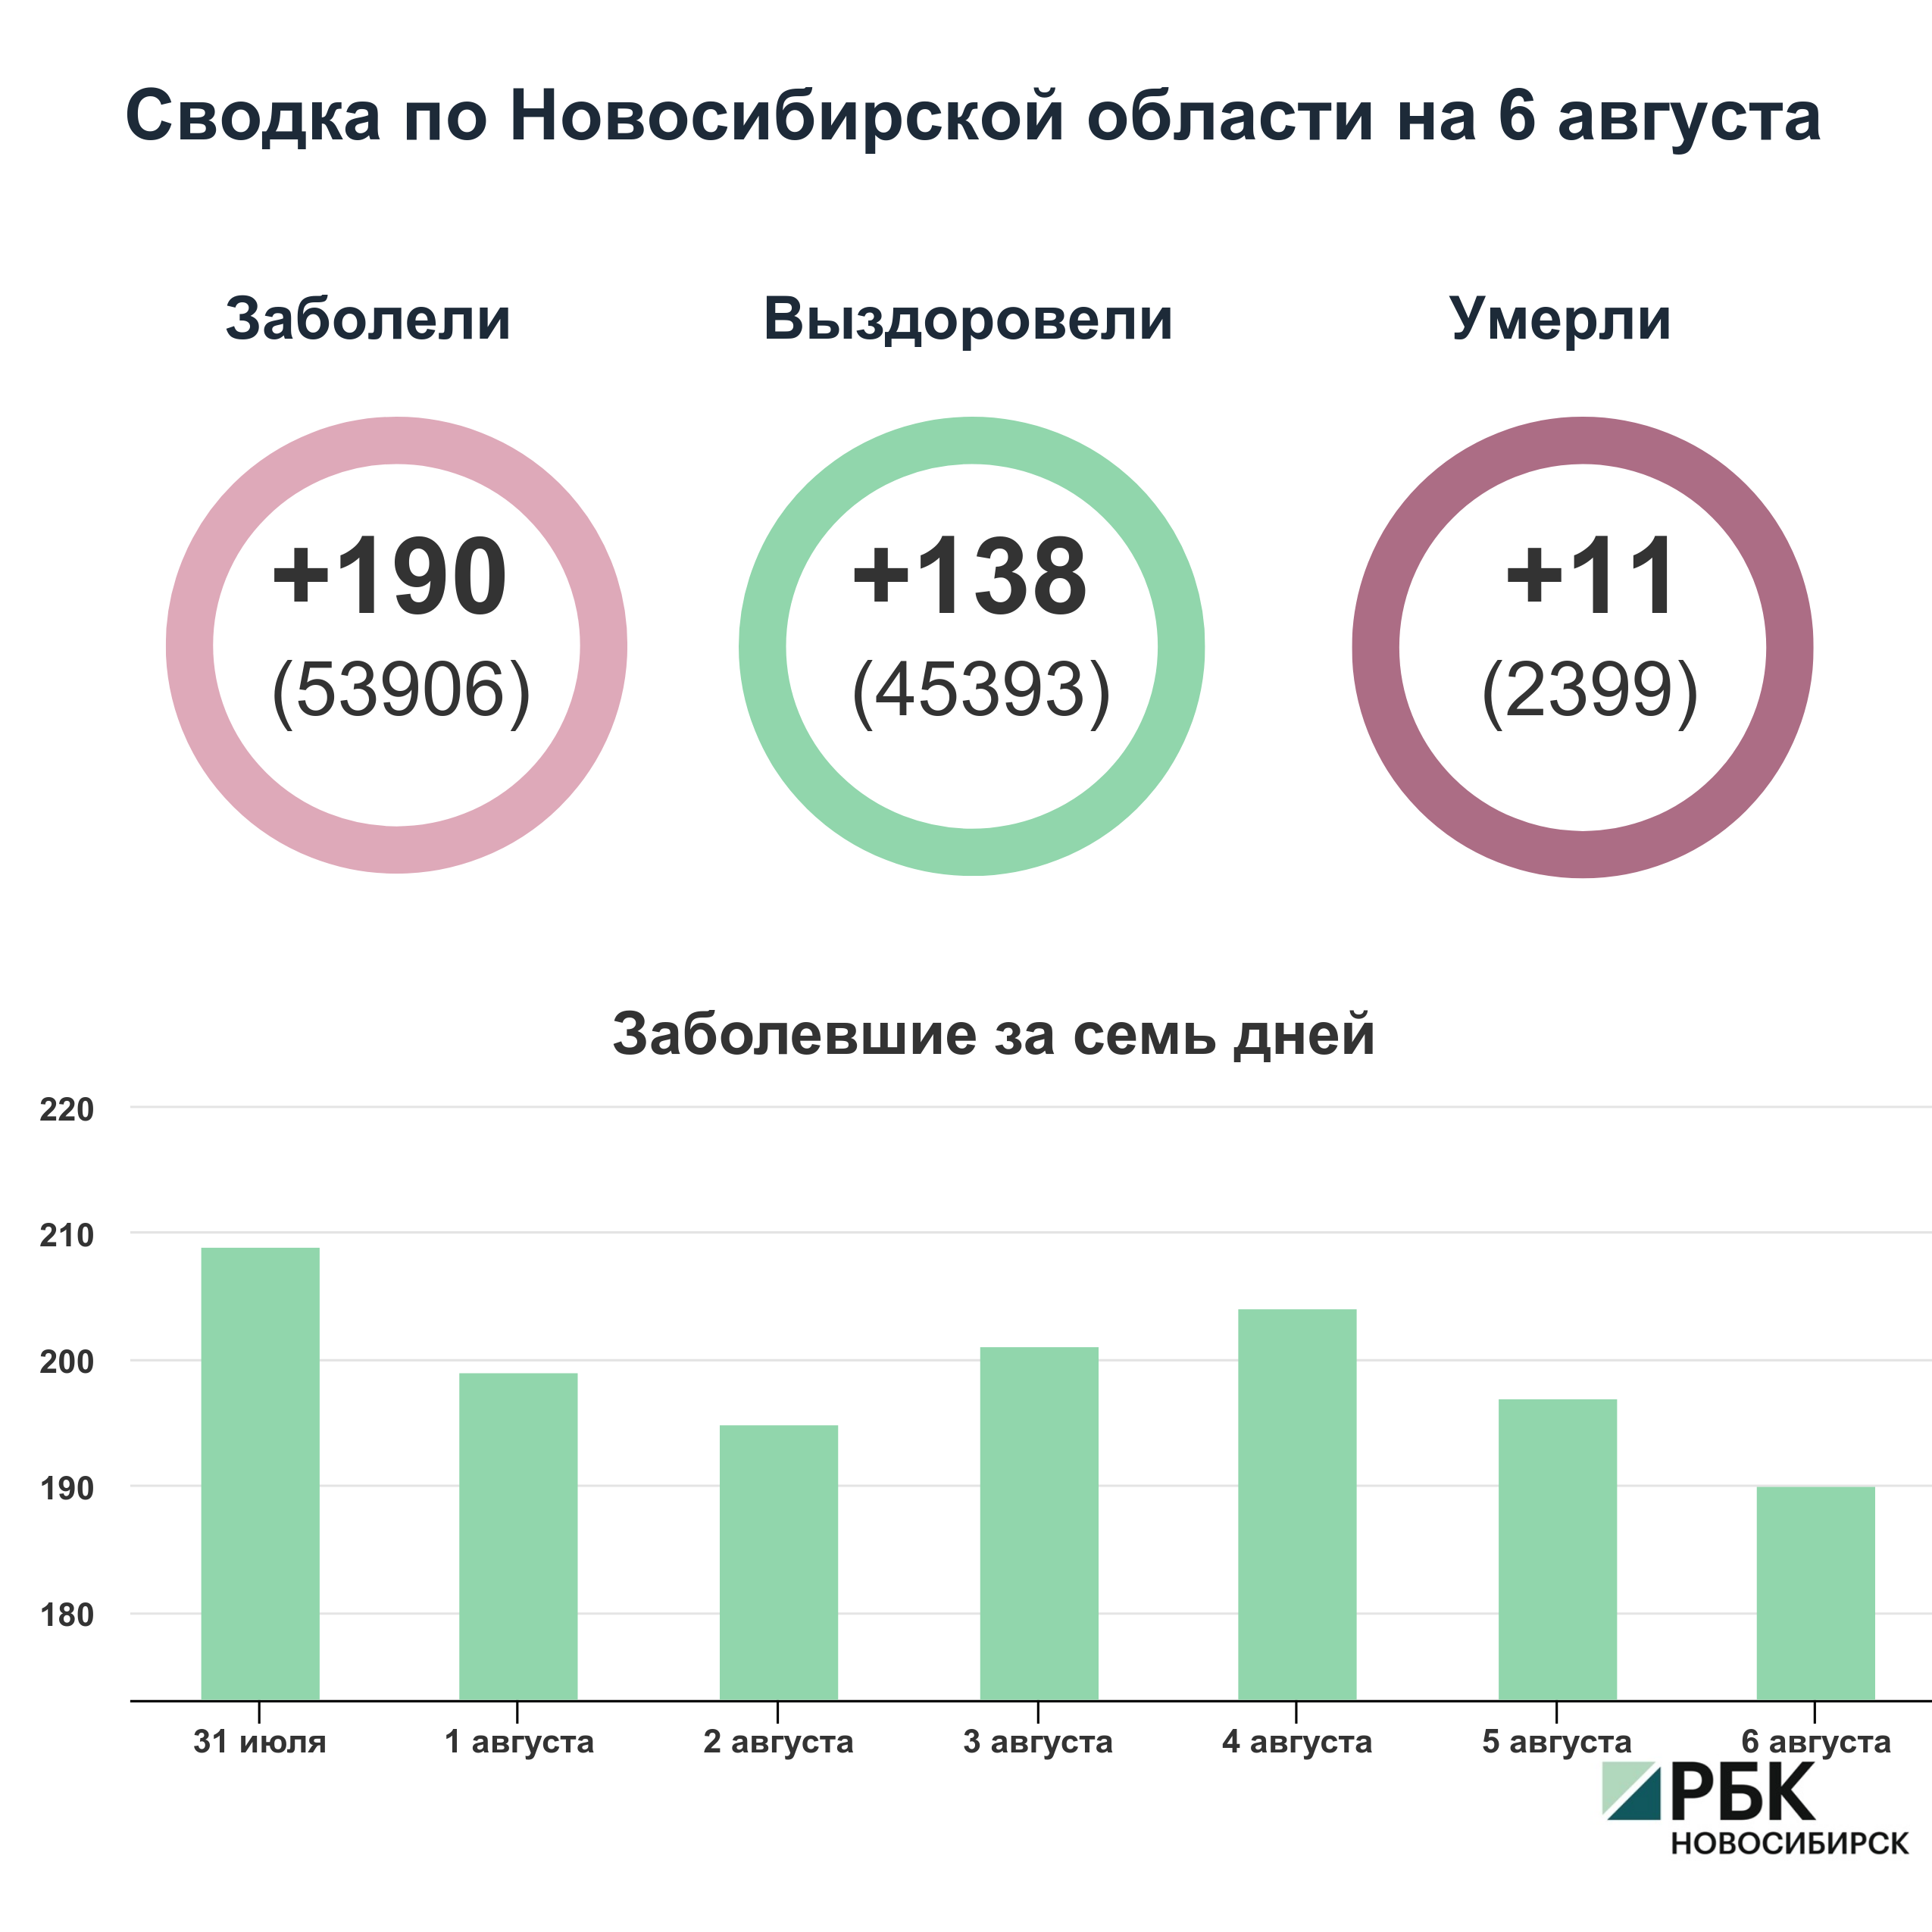 Коронавирус в Новосибирске: сводка на 6 августа